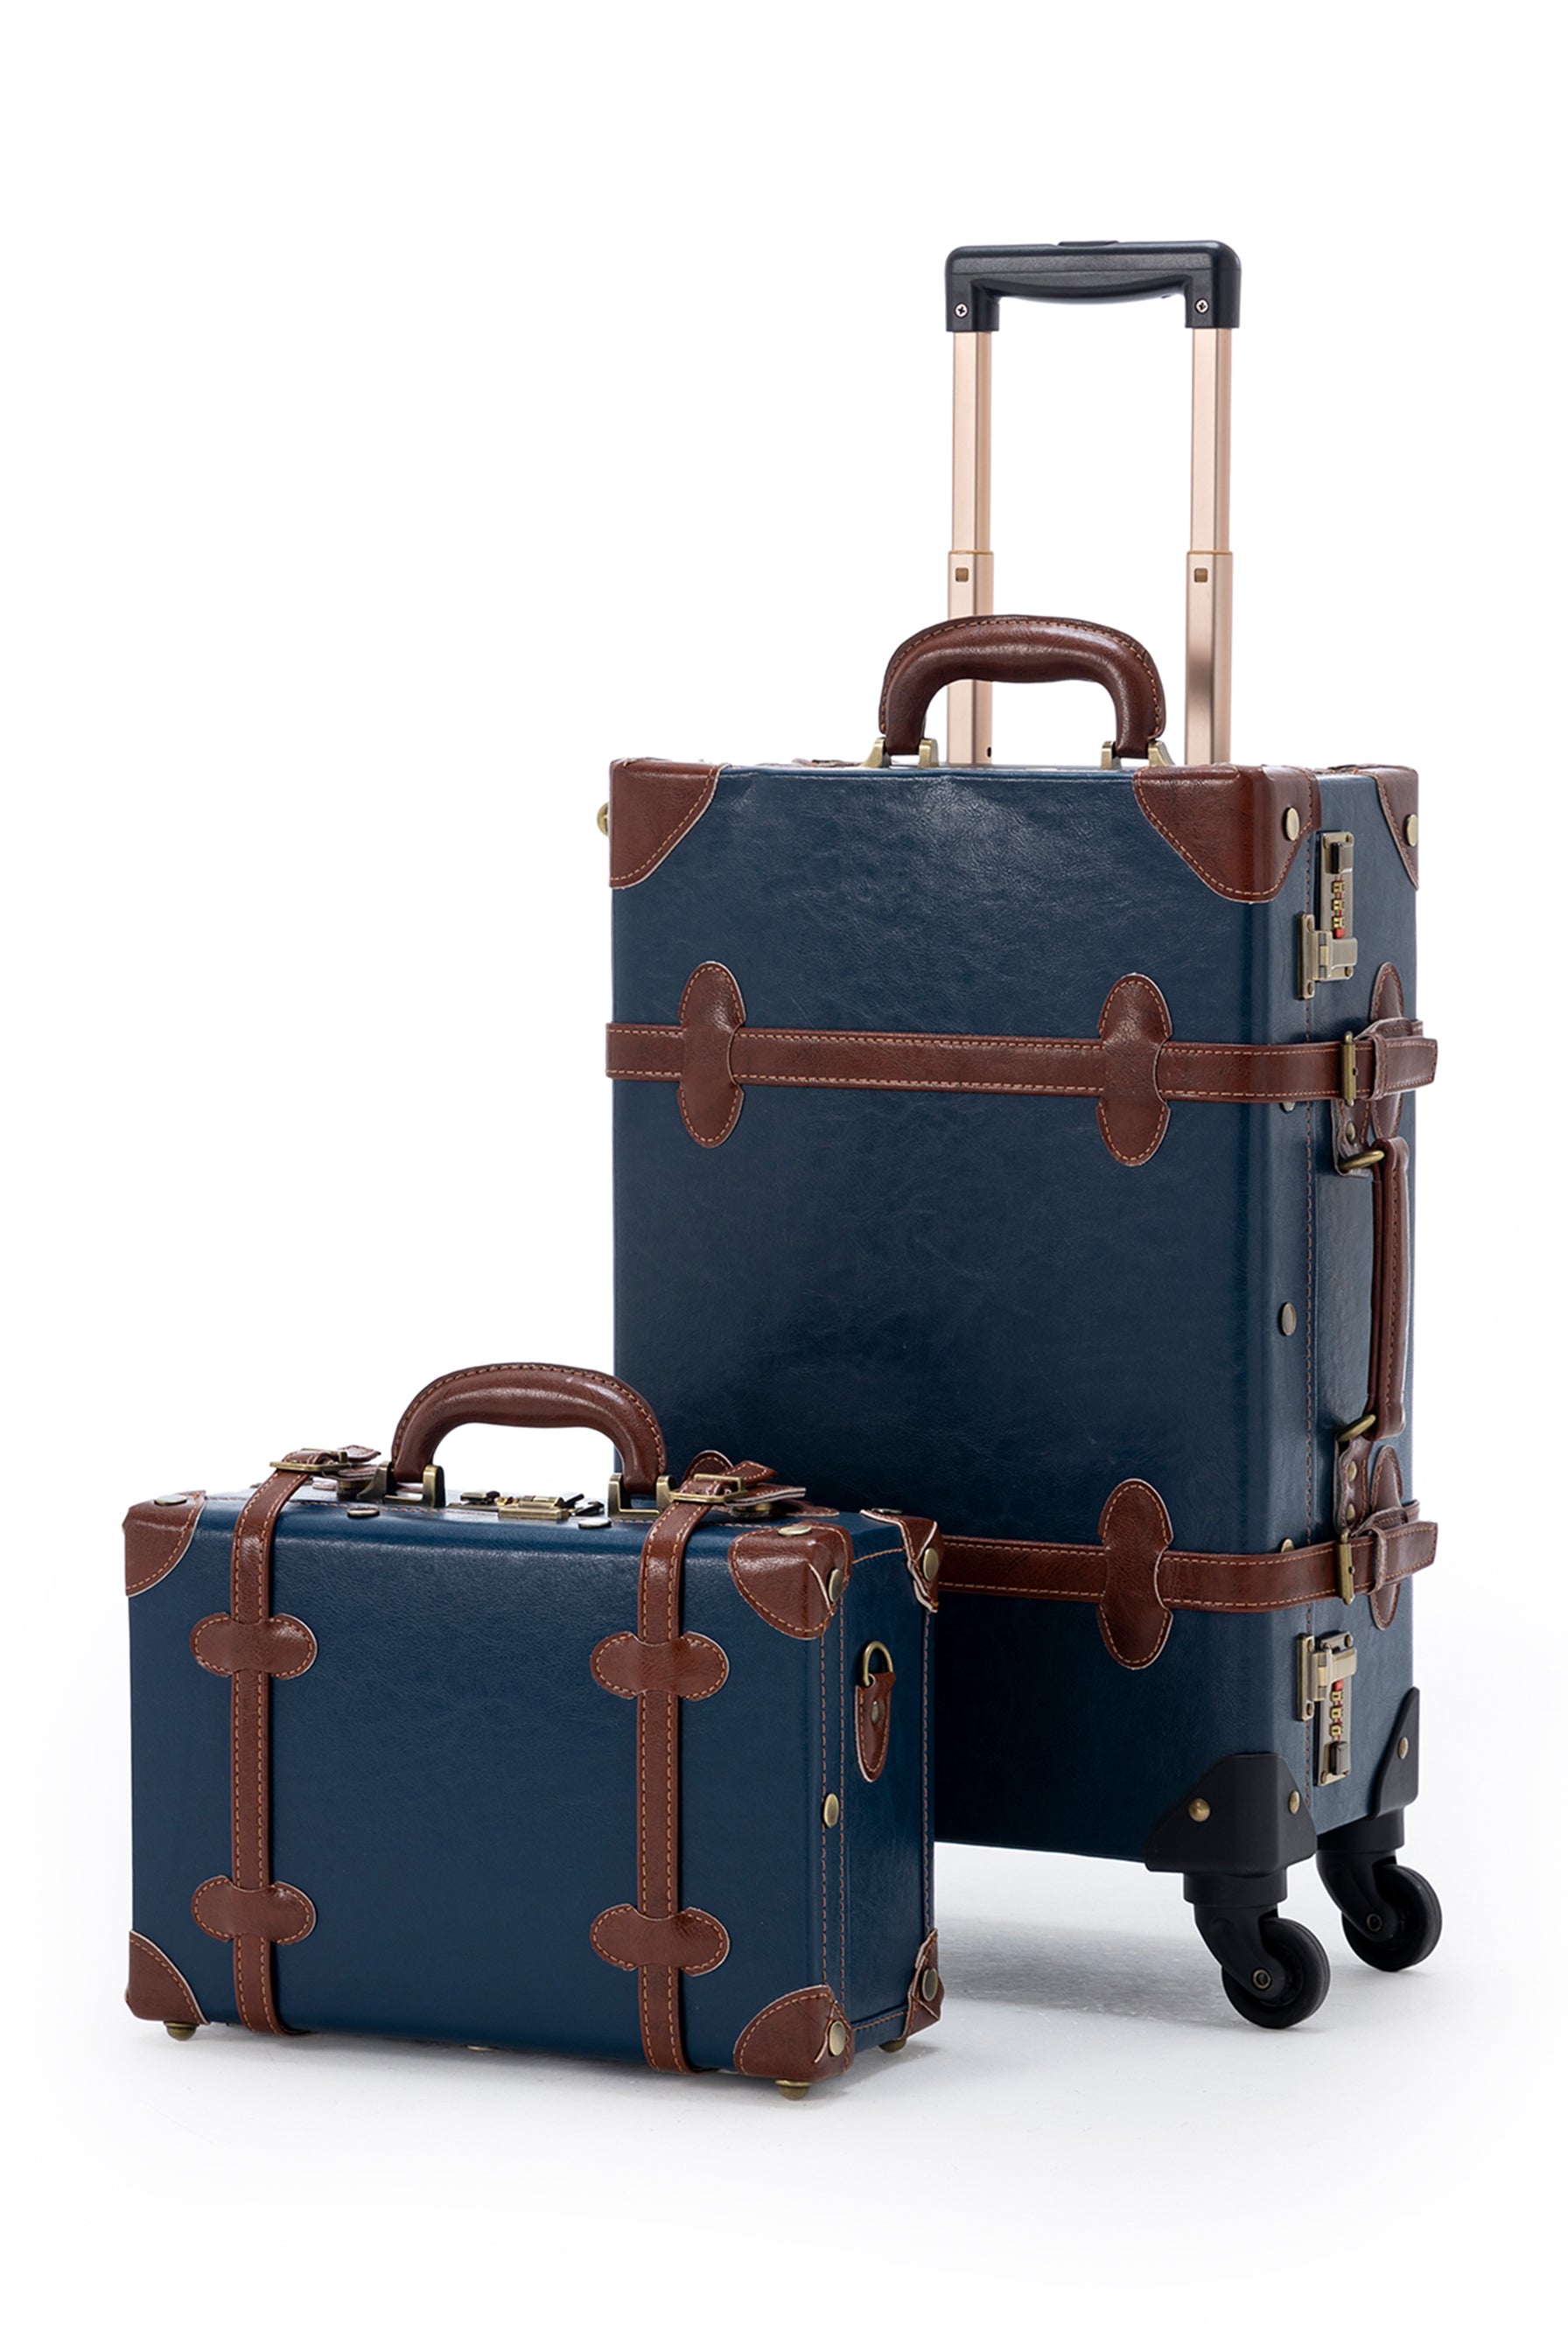 SarahFace 2 Pieces Luggage Set - Navy Blue's